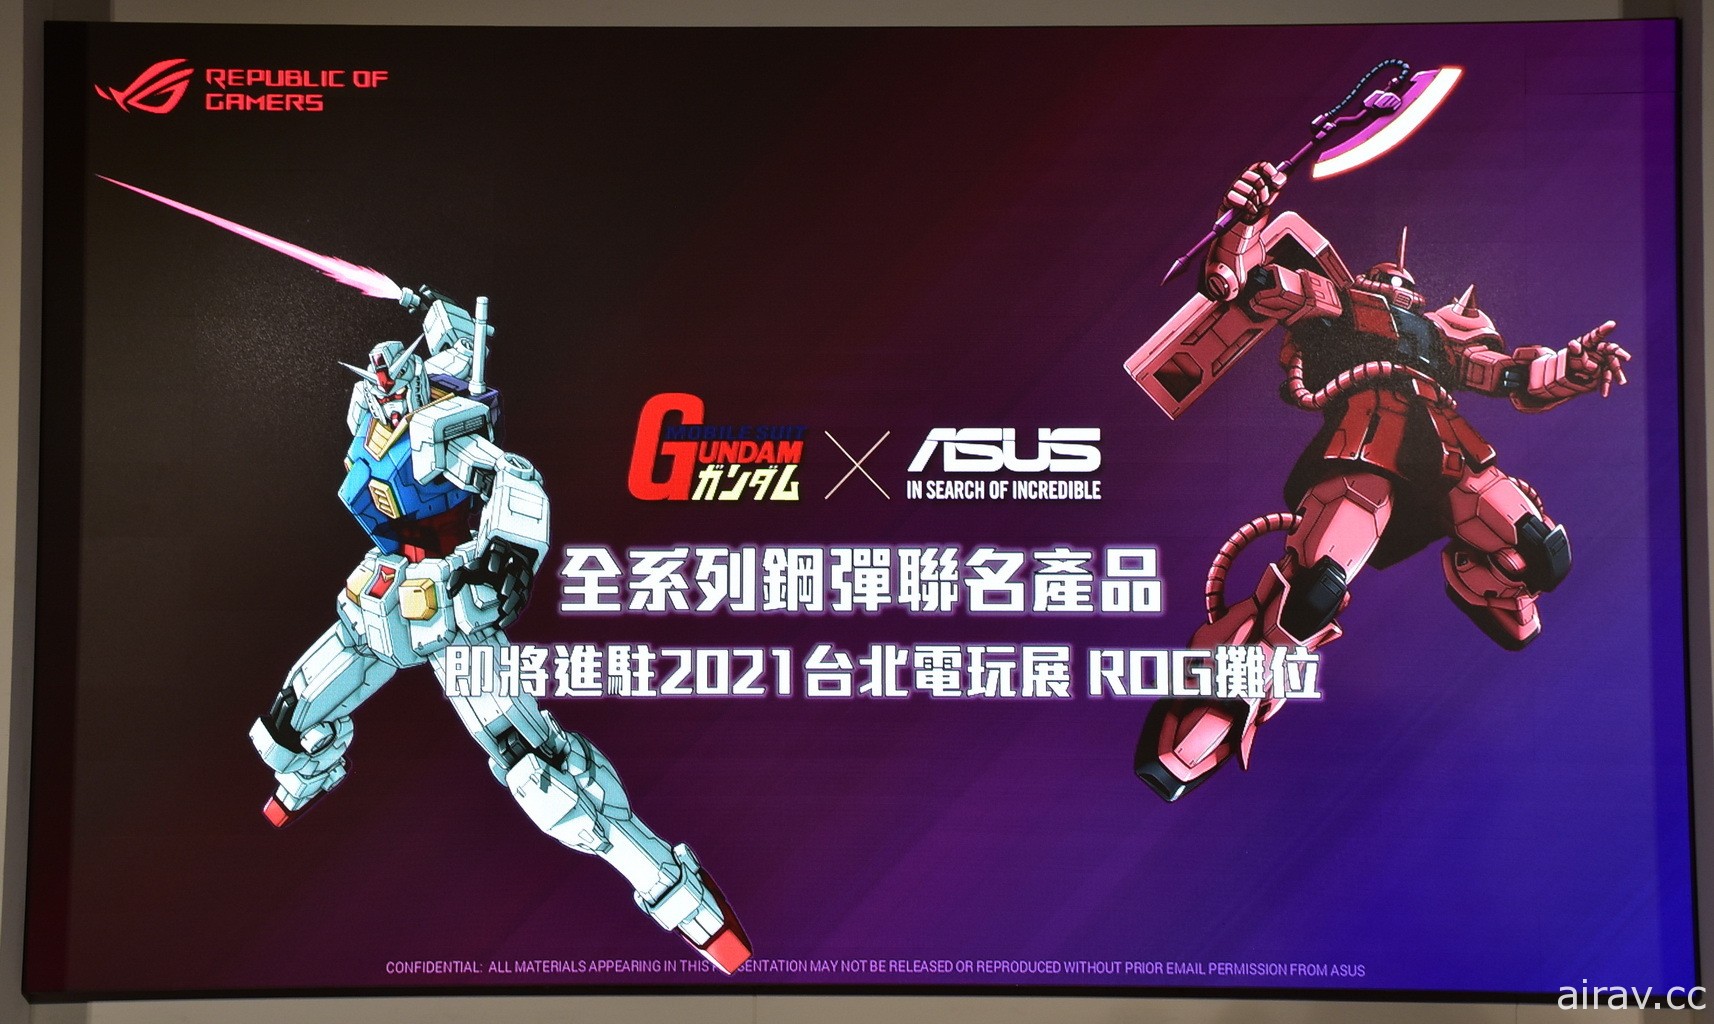 【TpGS 21】台北國際電玩展本月底登場 公開玩家區重點、行動遊戲為主軸